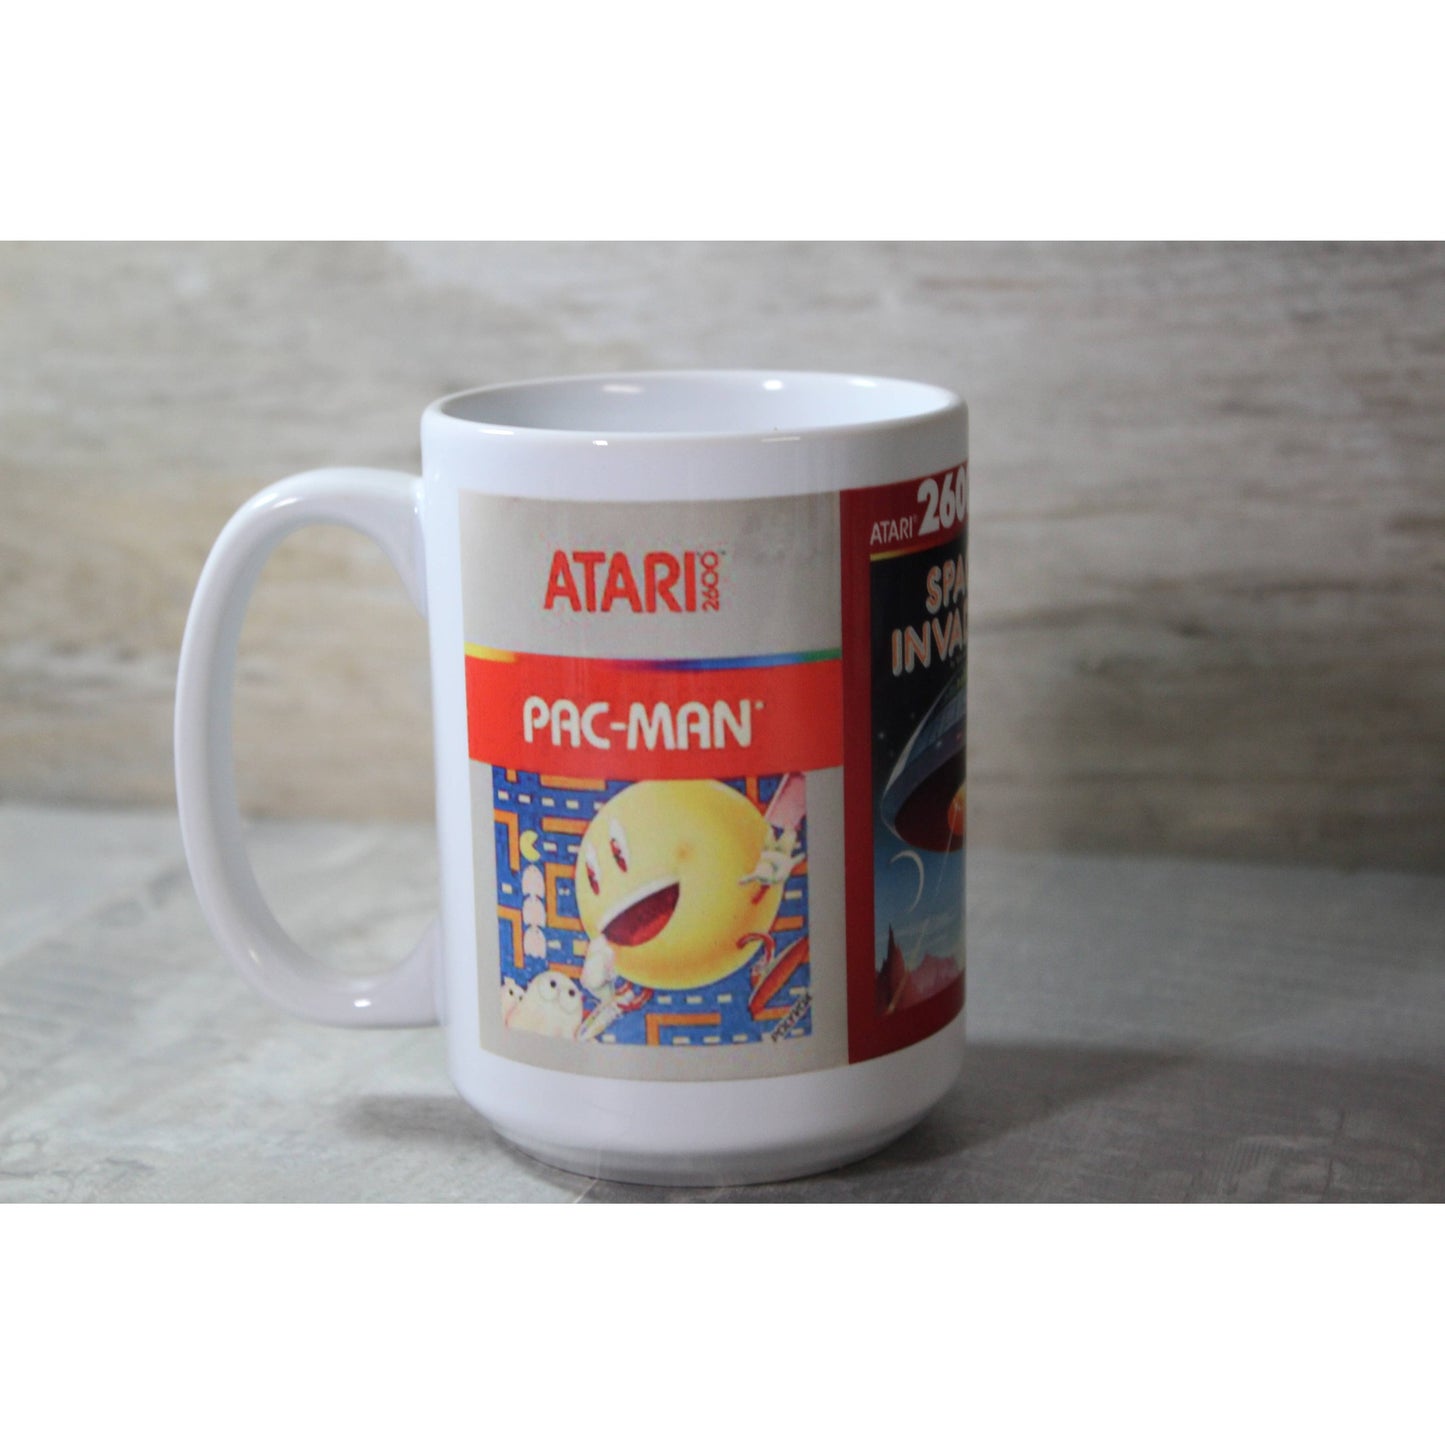 Retro Gaming Pacman, Space Invaders Ceramic Mug | Coffee Tea Cup | 15oz